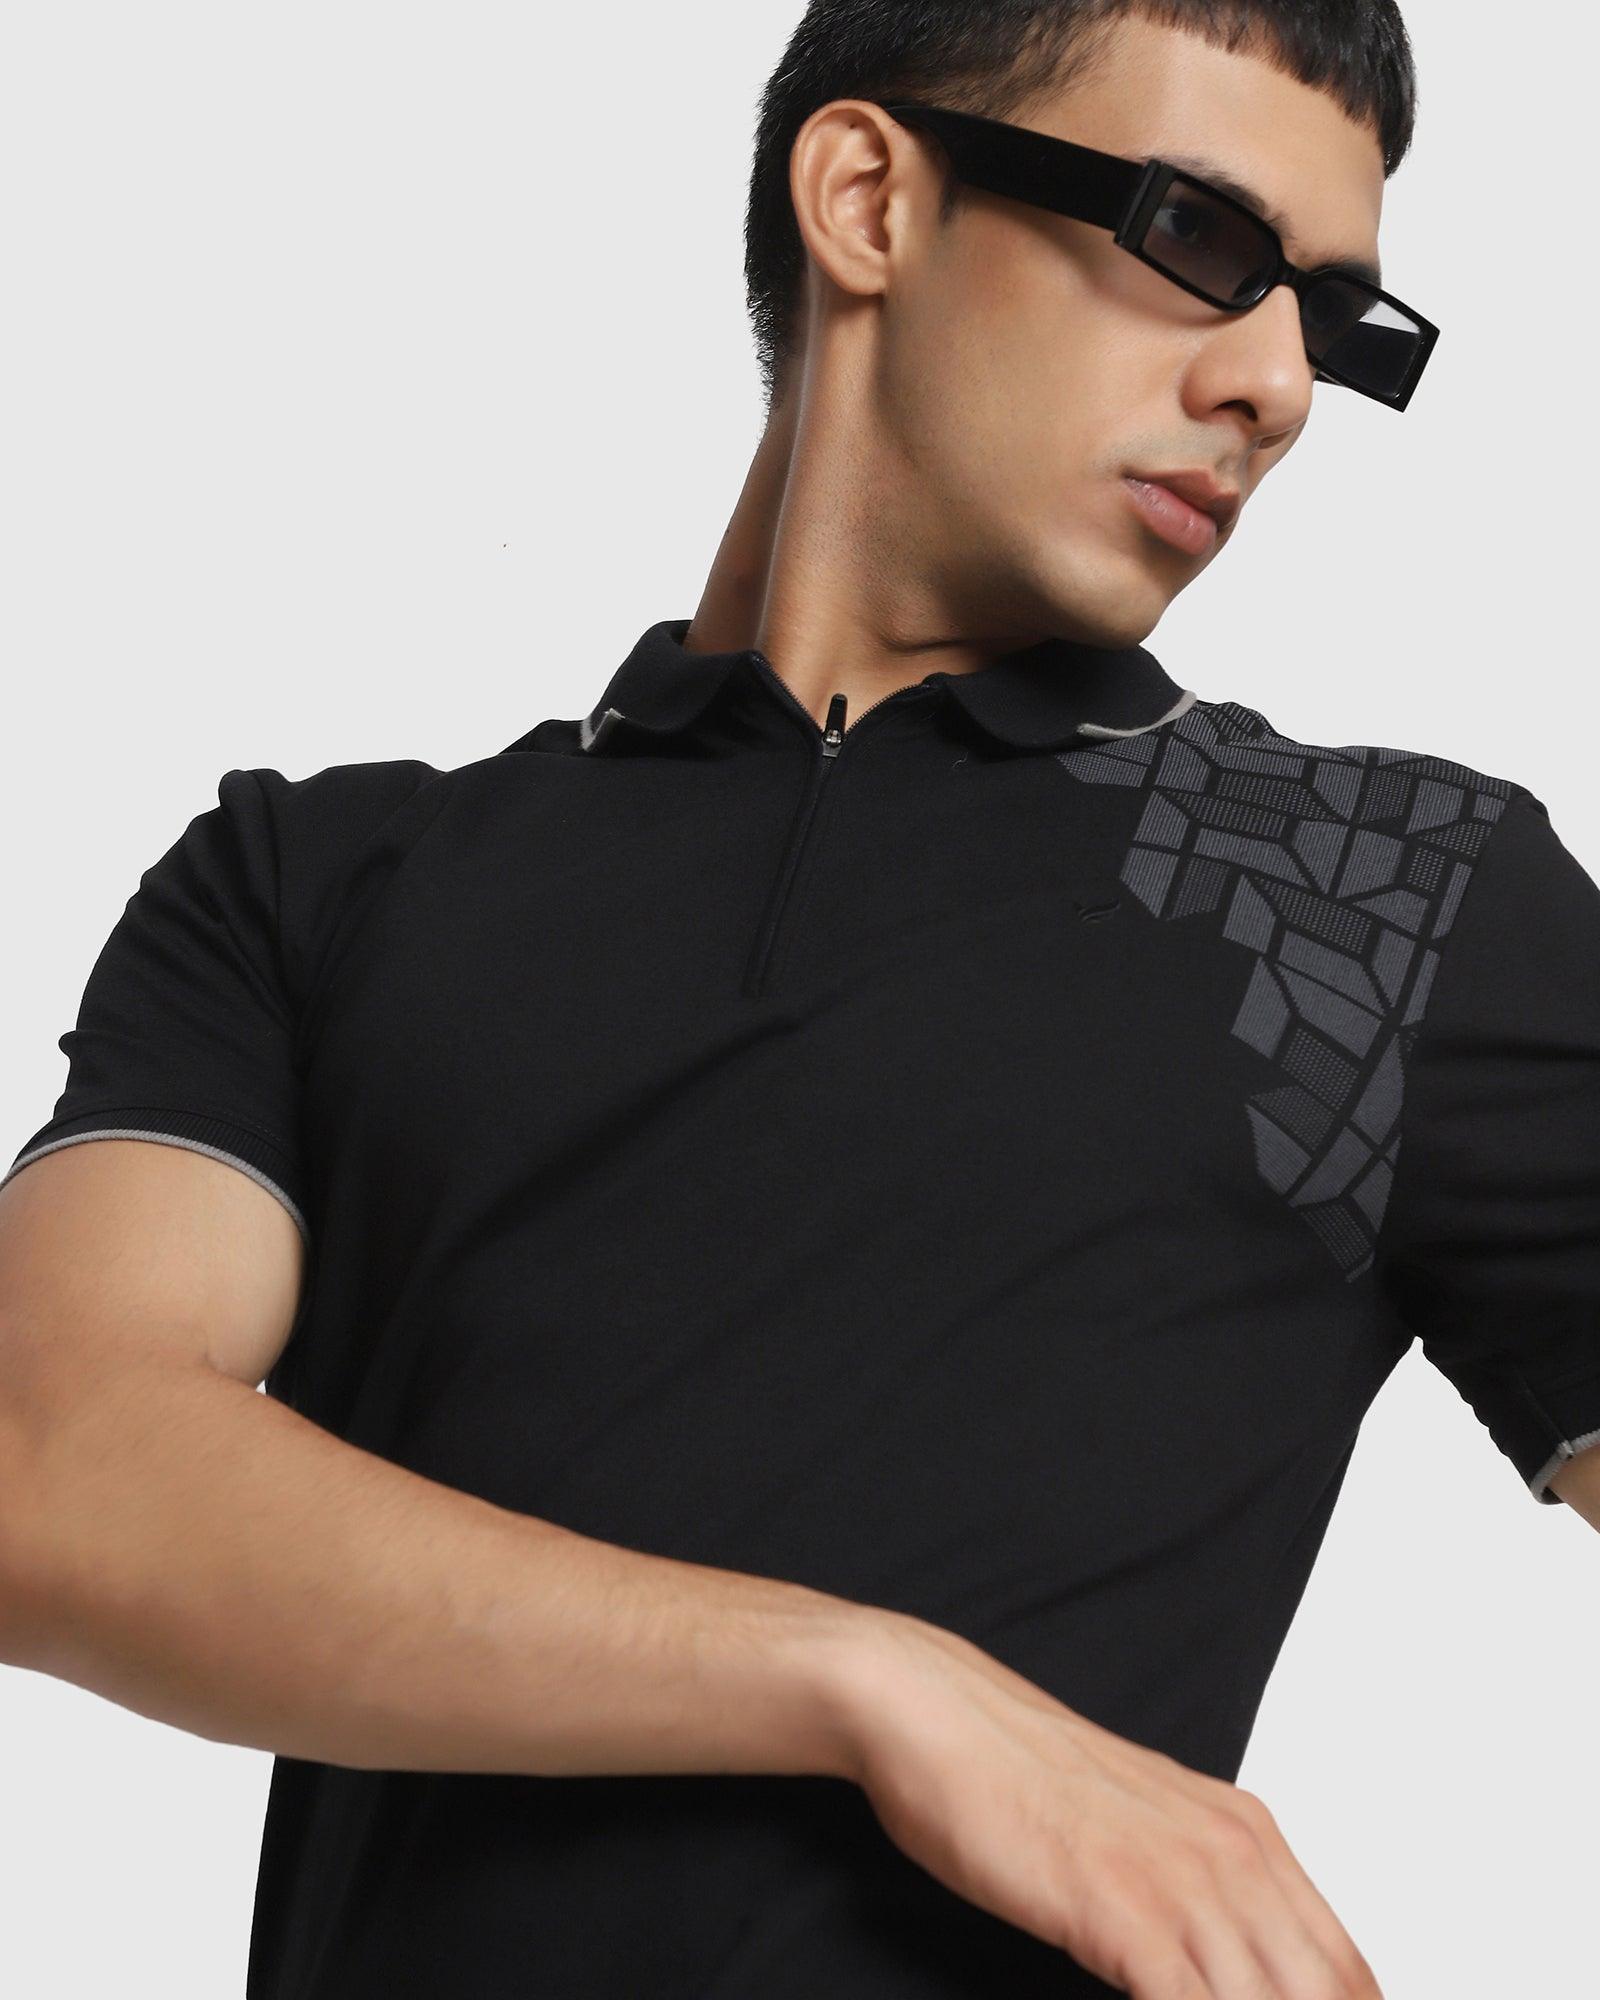 TechPro Polo Jet Black Printed T Shirt - Jack